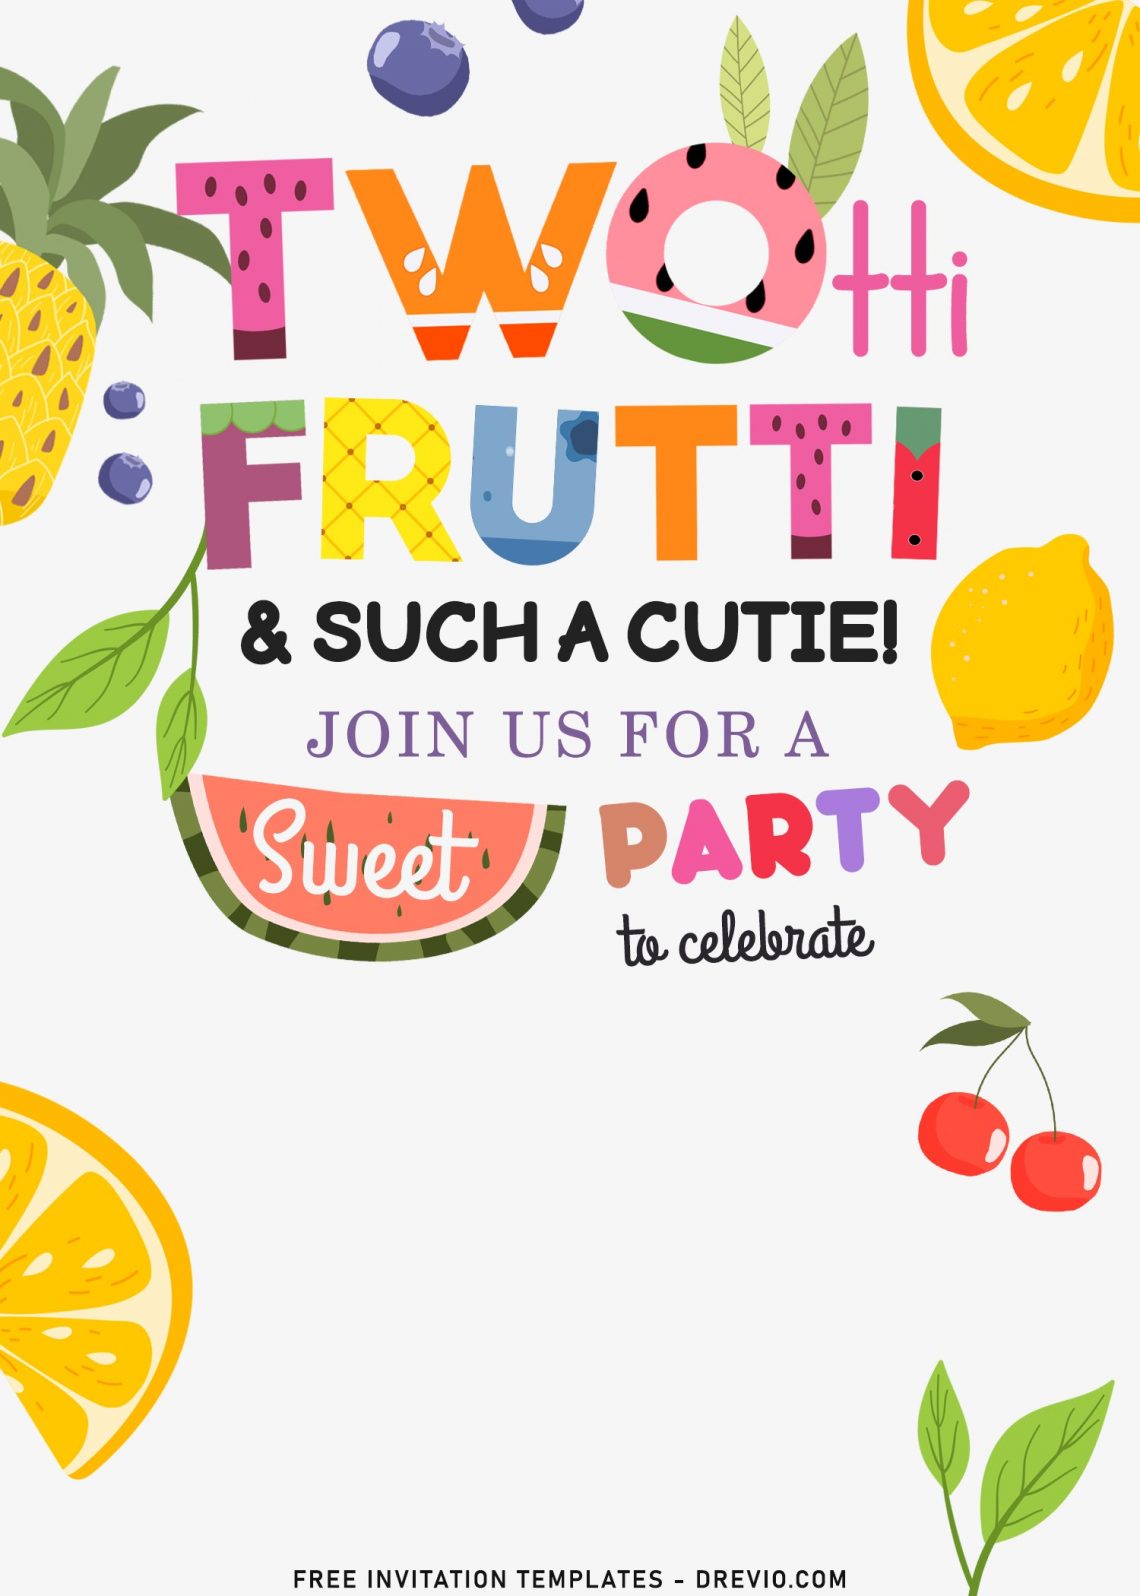 7-tutti-frutti-birthday-party-invitation-templates-download-hundreds